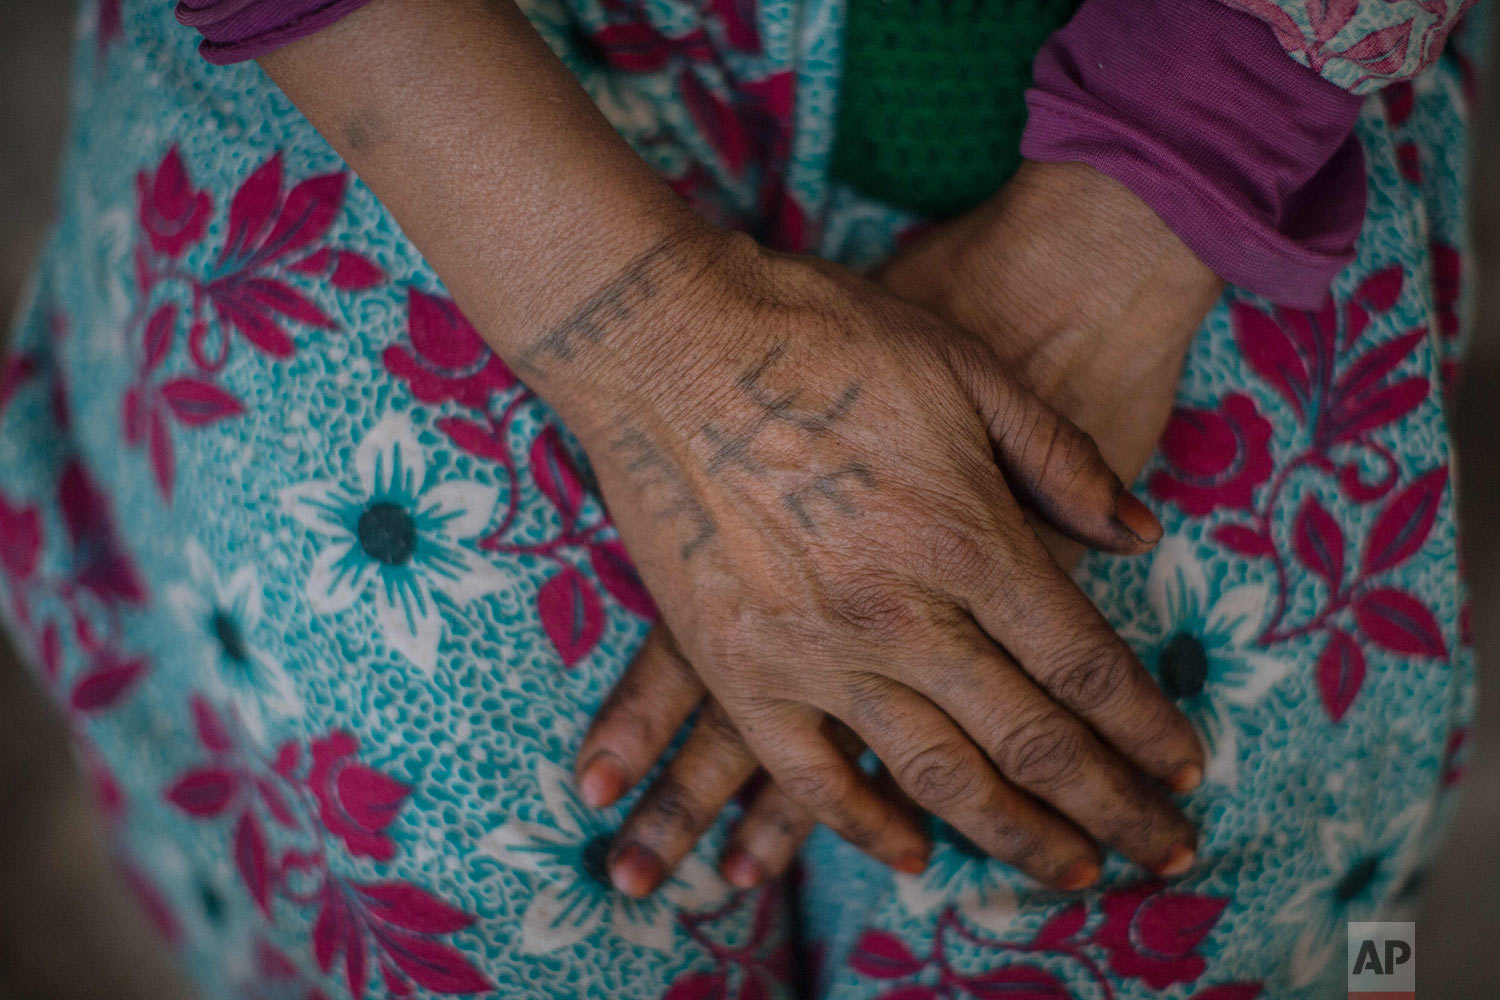 Buy Semipermanent Tattoo Tiny Finger Tattoos X 8 Set Lasts up Online in  India  Etsy